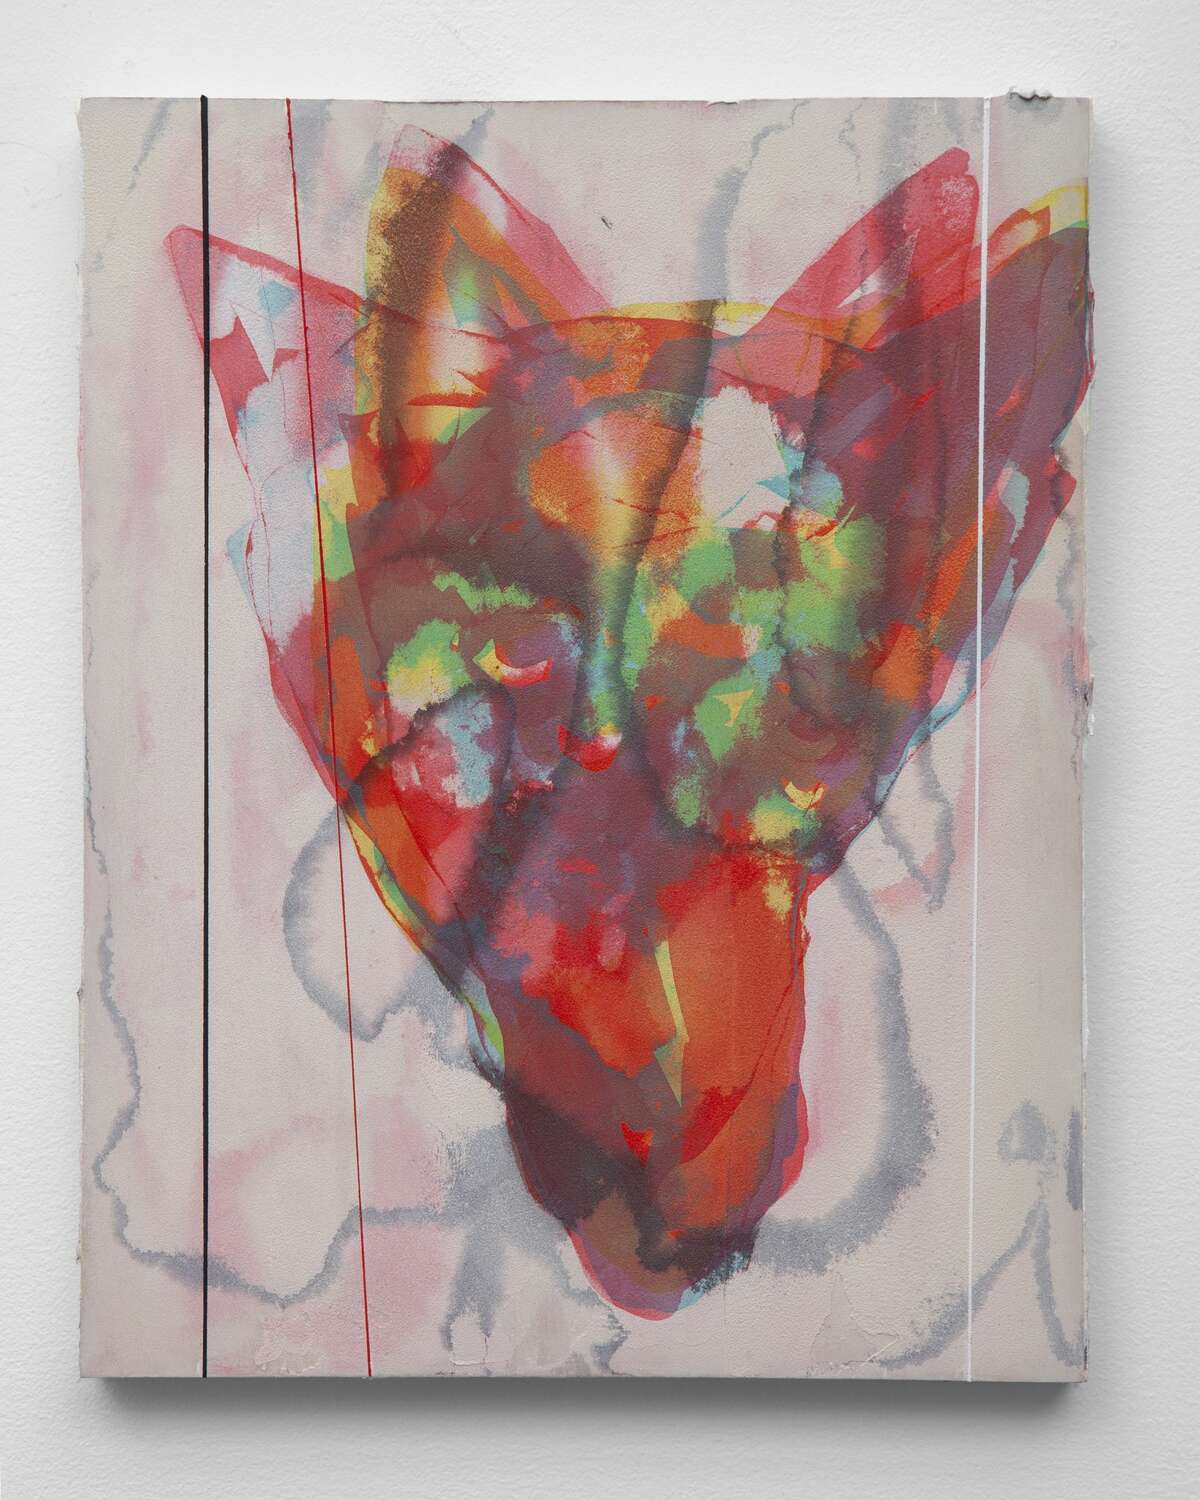 "Opulent coyote" by Duane Slick.